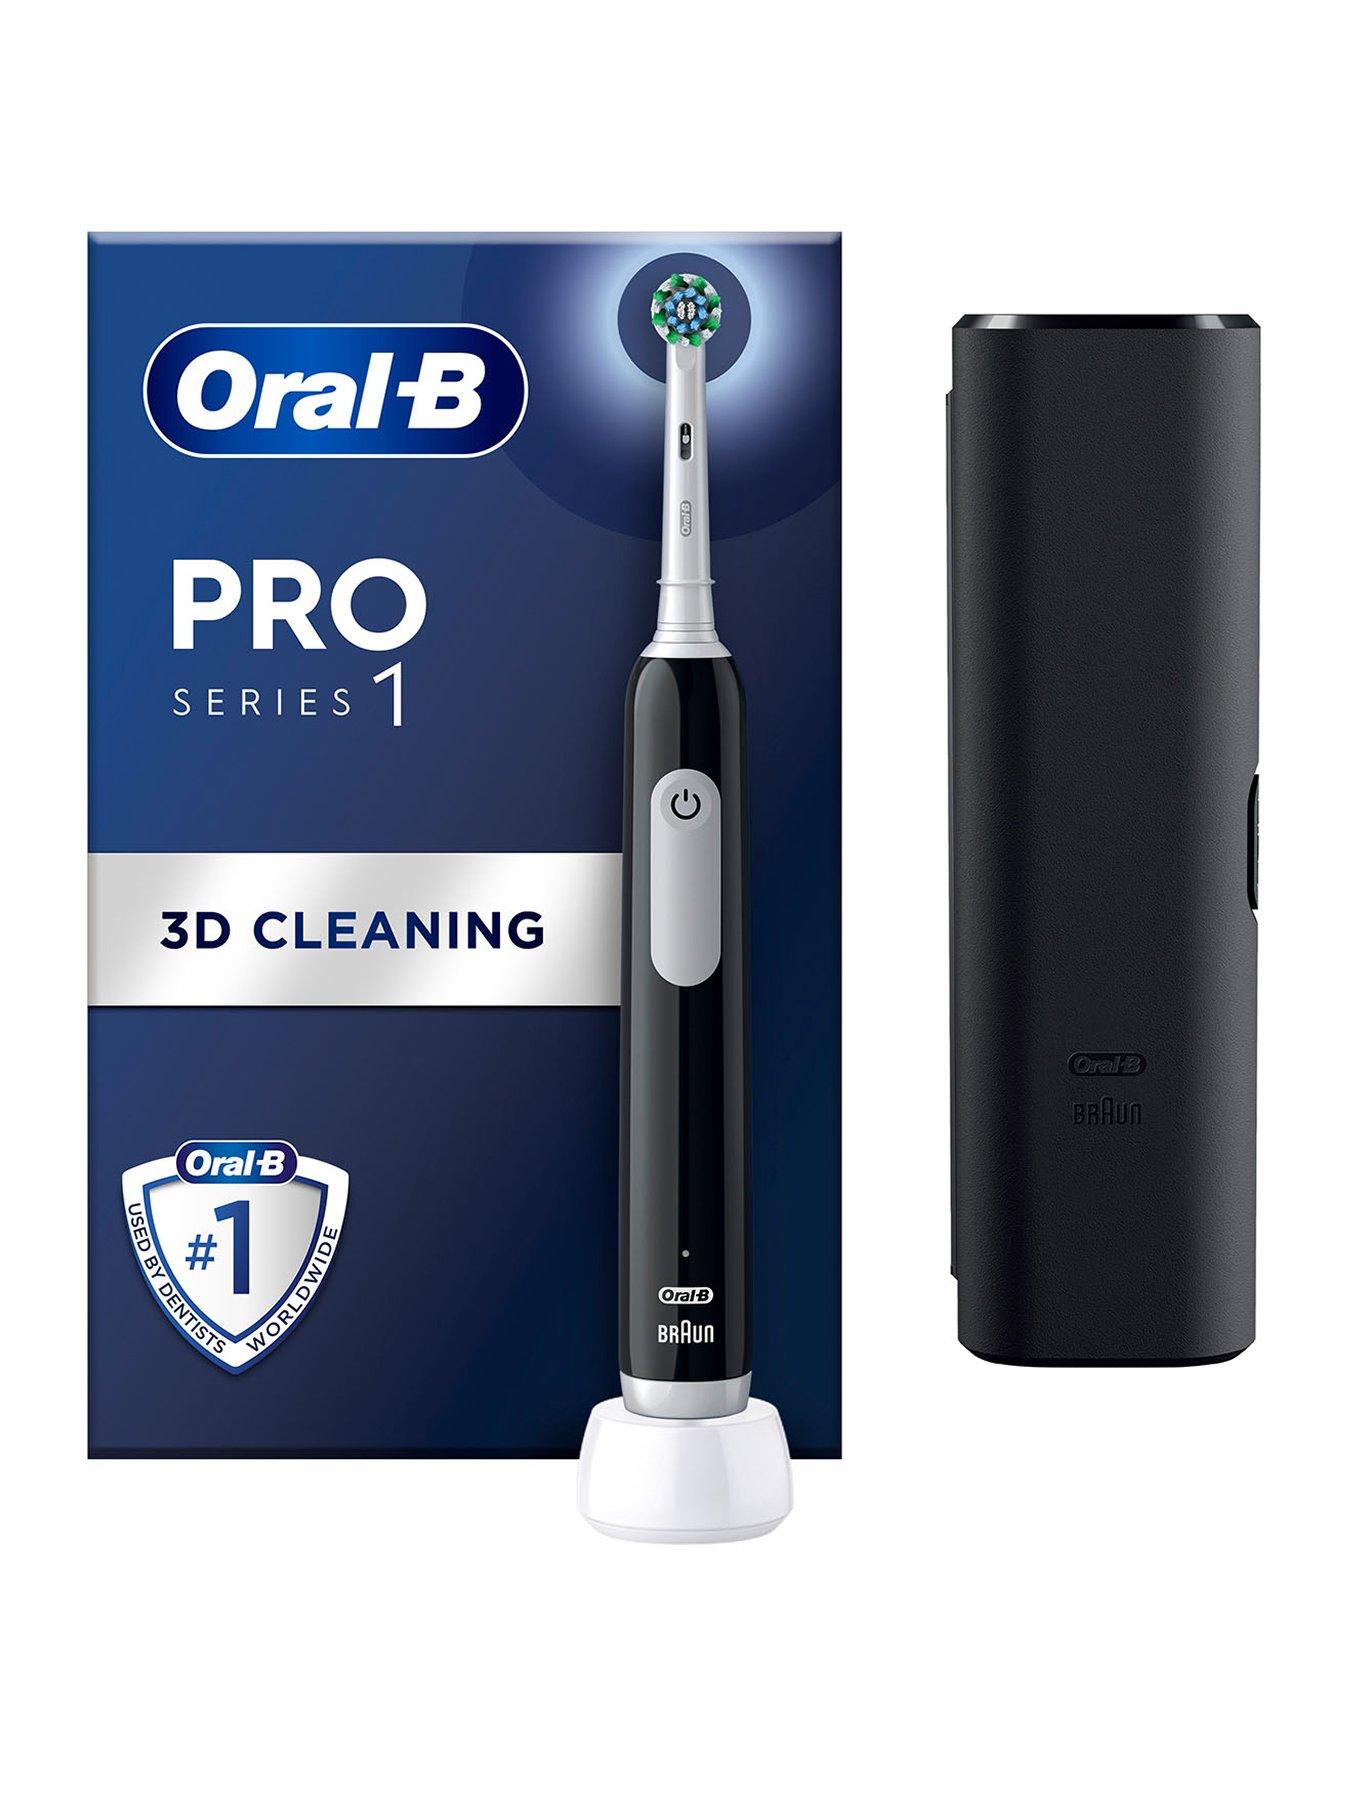 Oral-B Pro 3 3900 Duo black/white desde 104,99 €